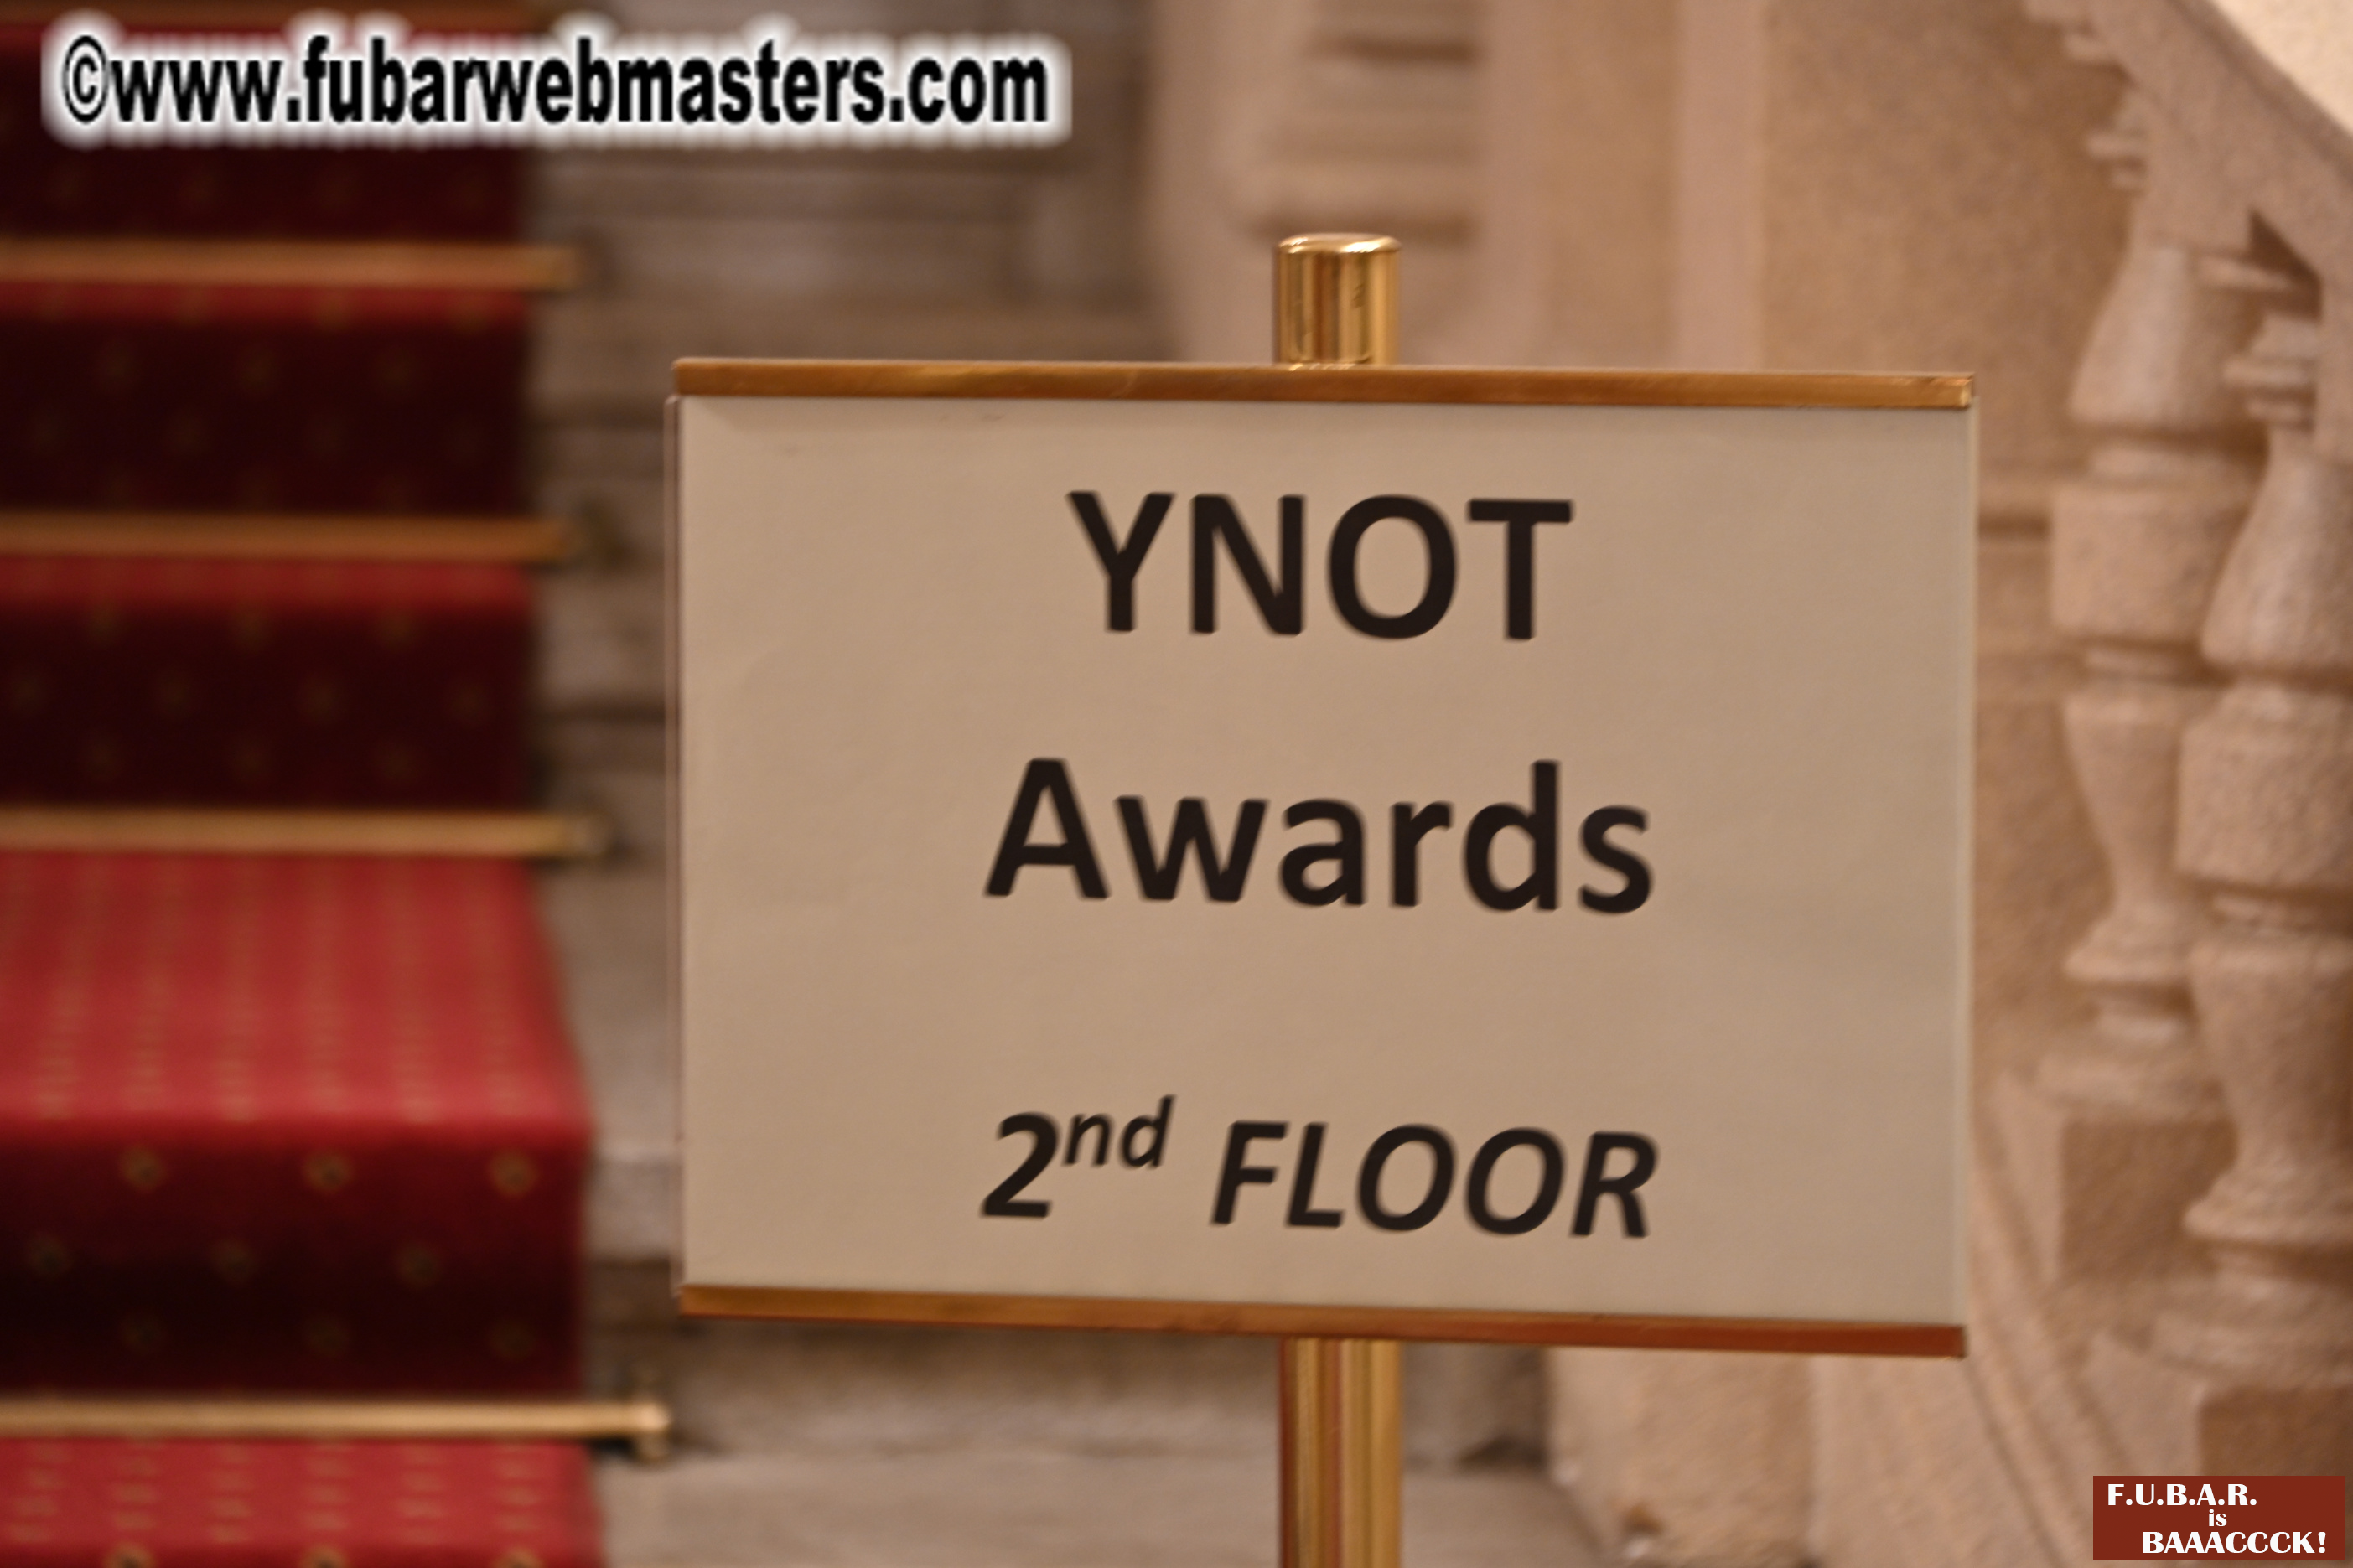 YNOT Awards Show